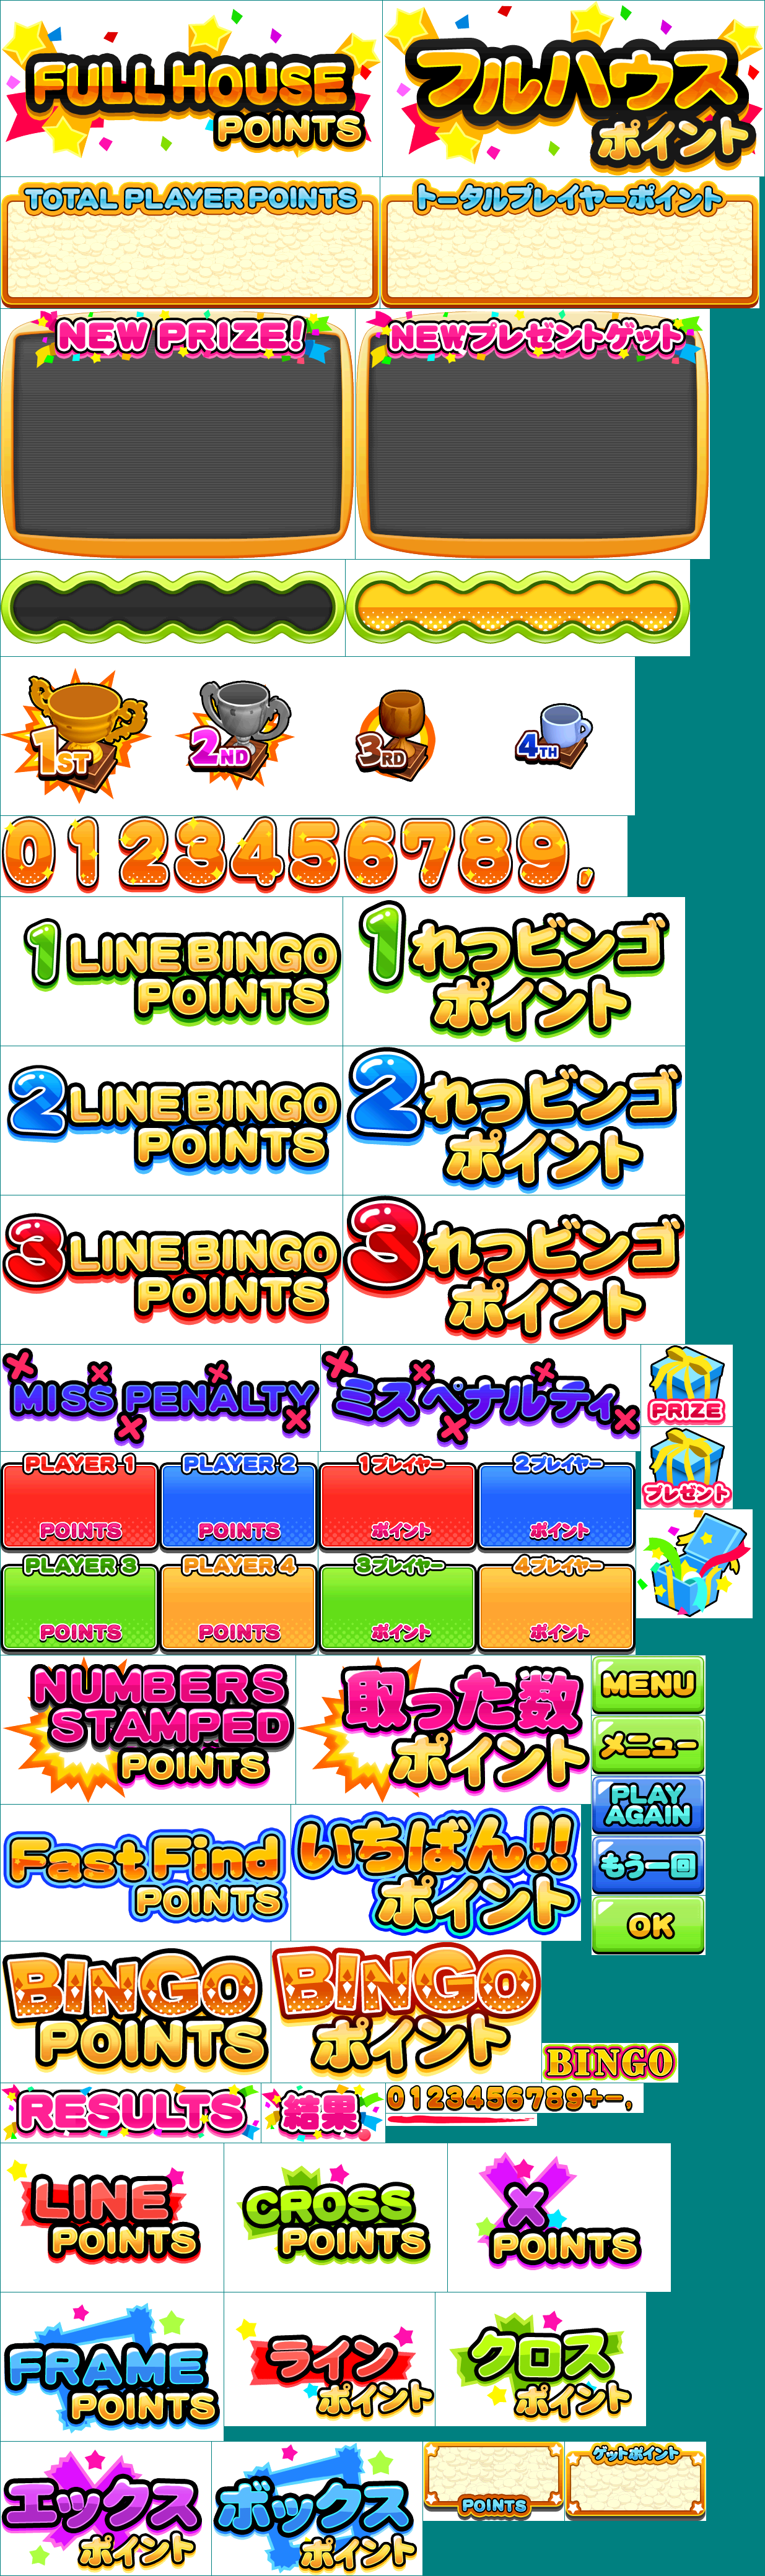 Bingo Party Deluxe - Results Graphics